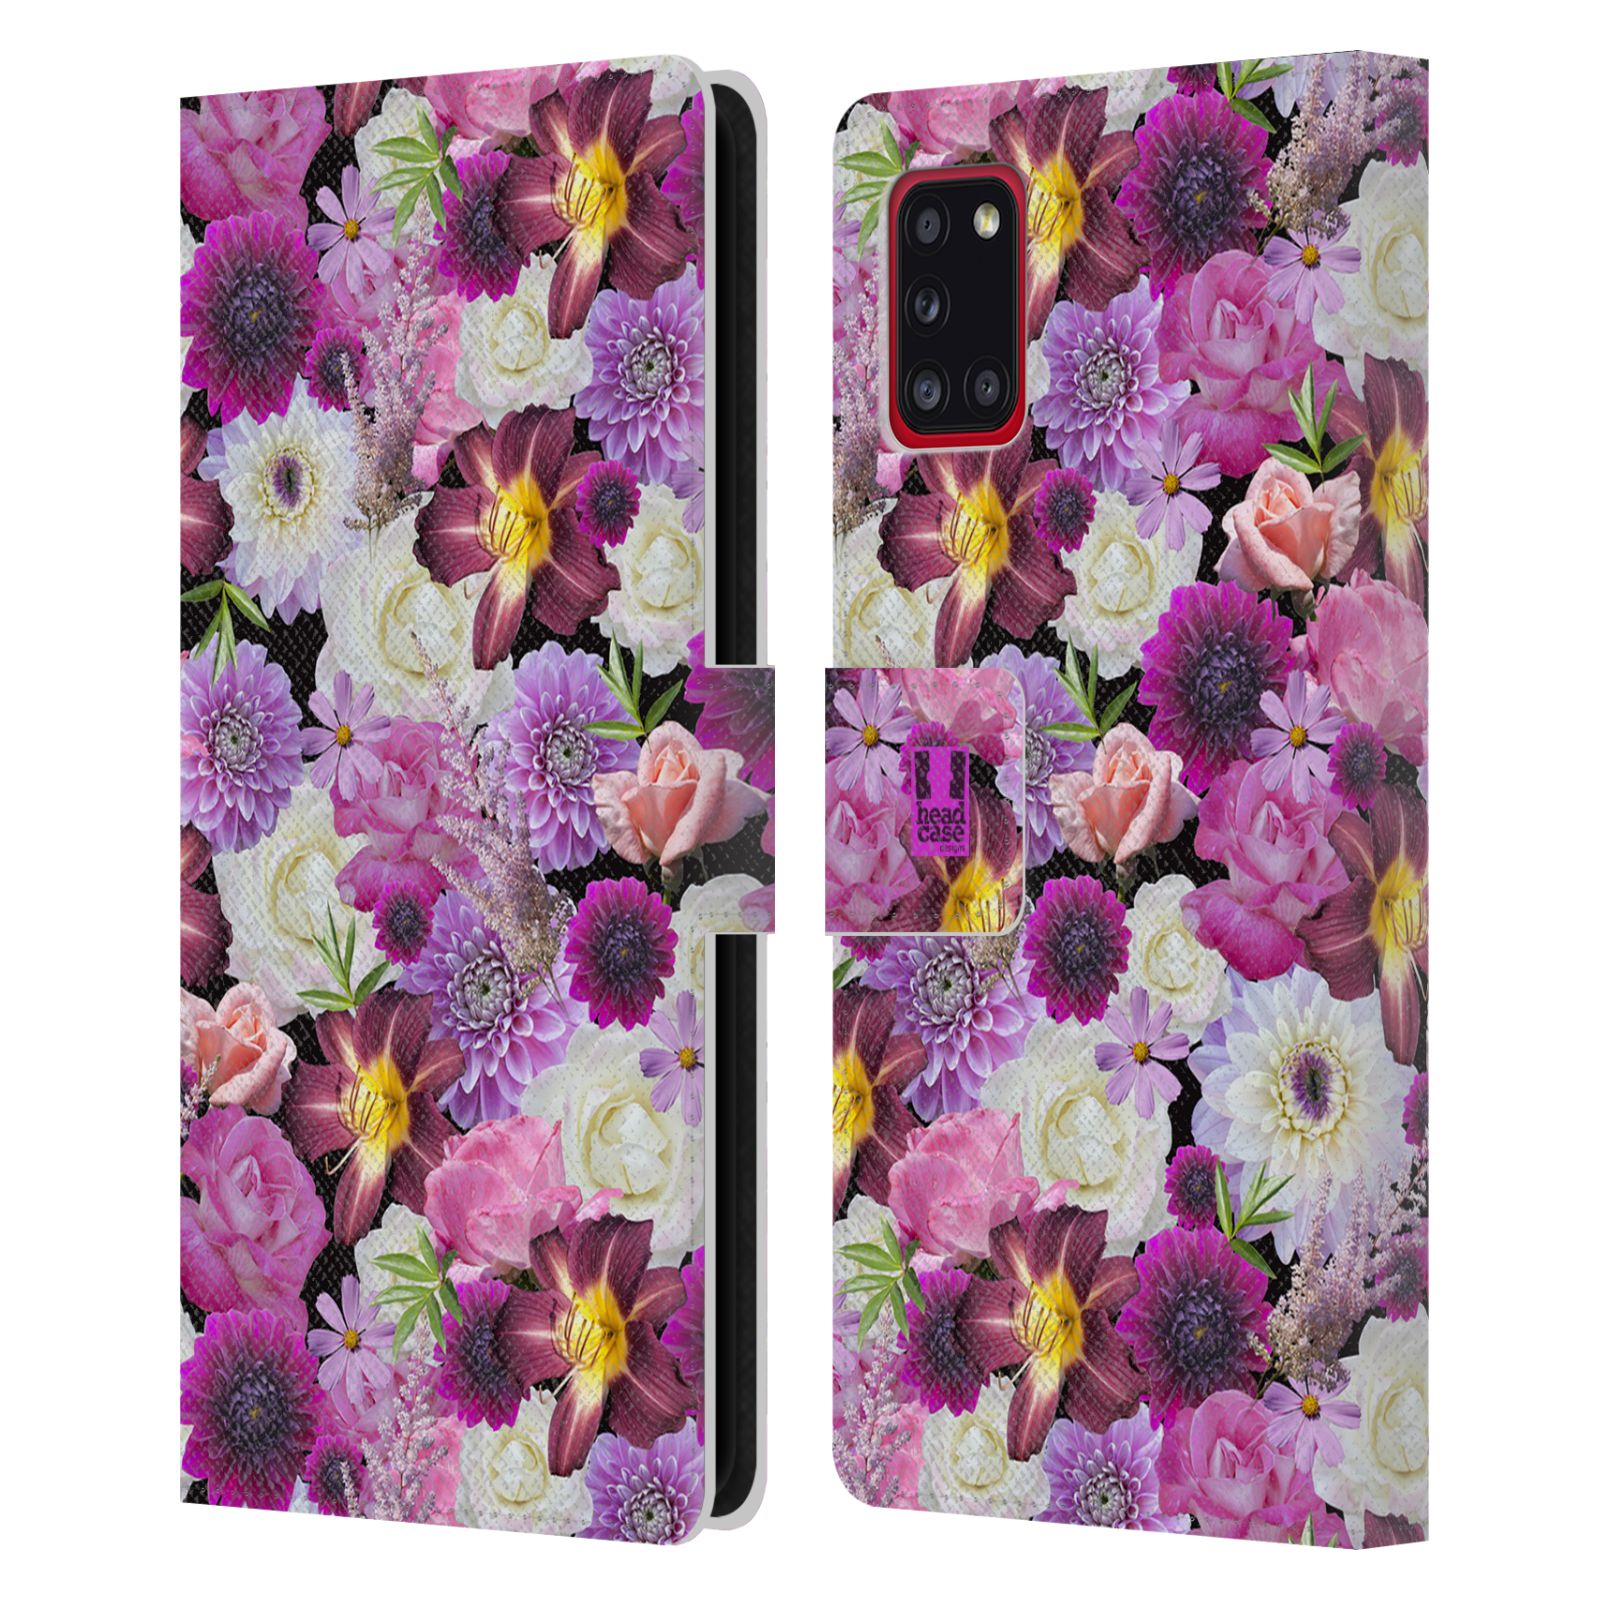 Pouzdro HEAD CASE na mobil Samsung Galaxy A31 květy foto fialová a bílá